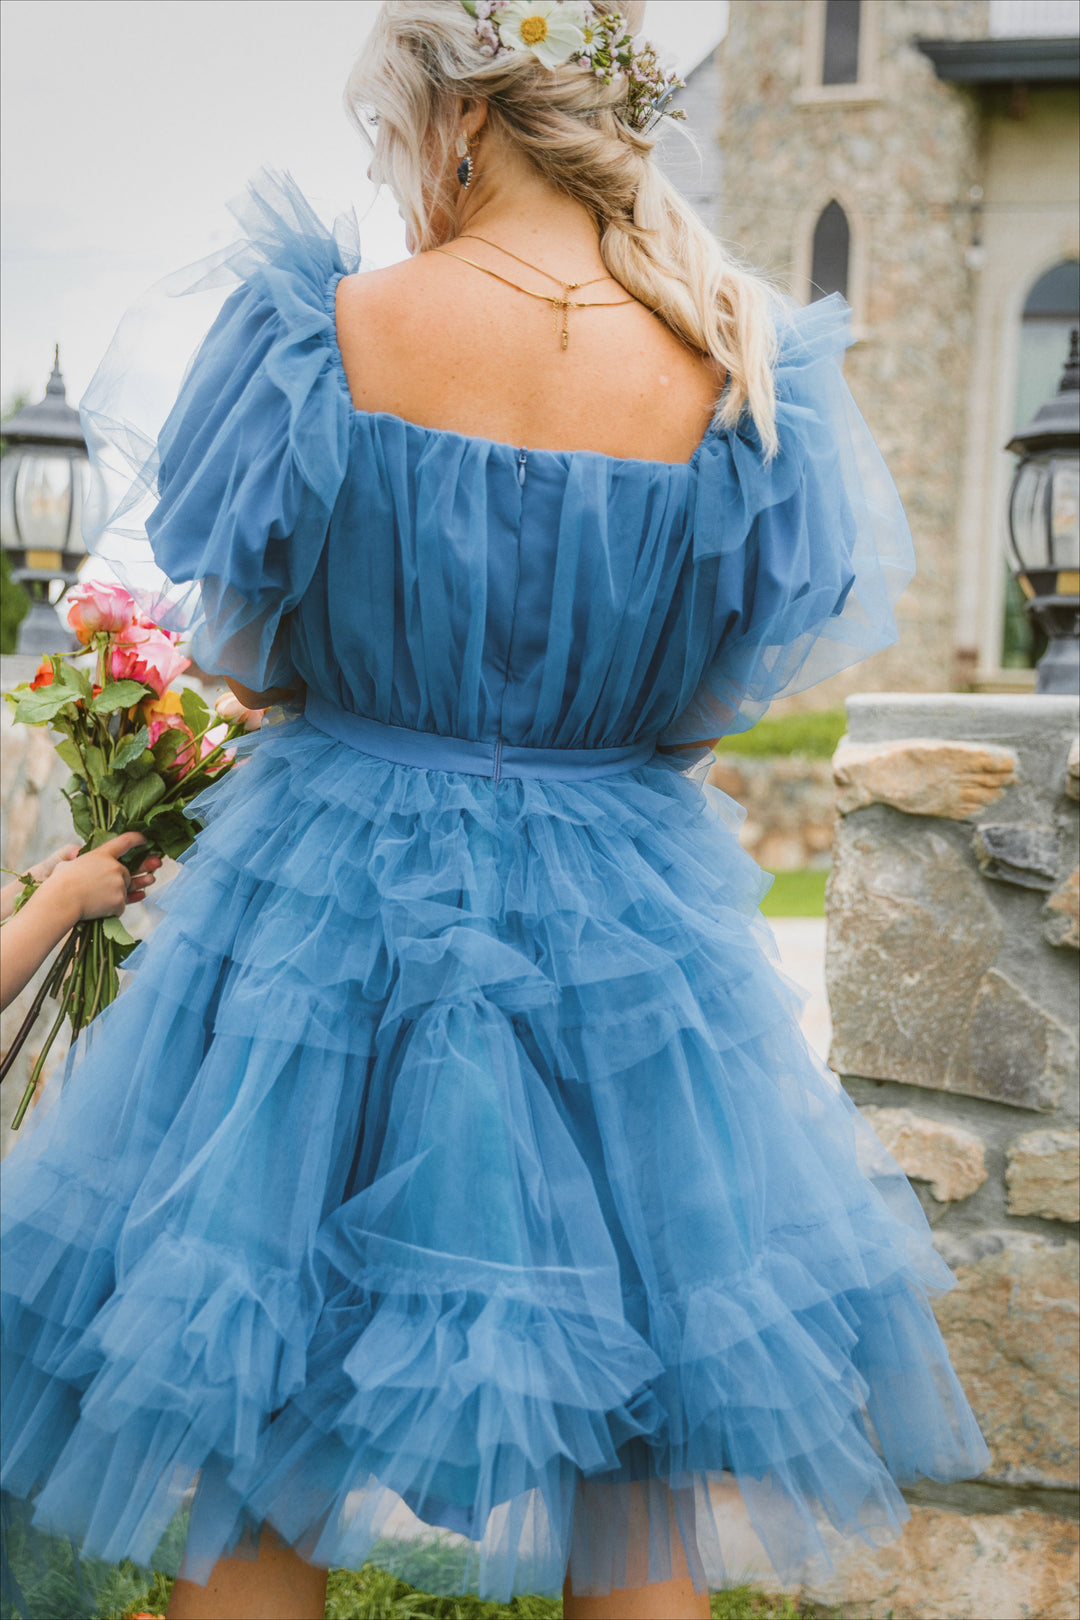 Pixie Dress in Blue - FINAL SALE-Adult